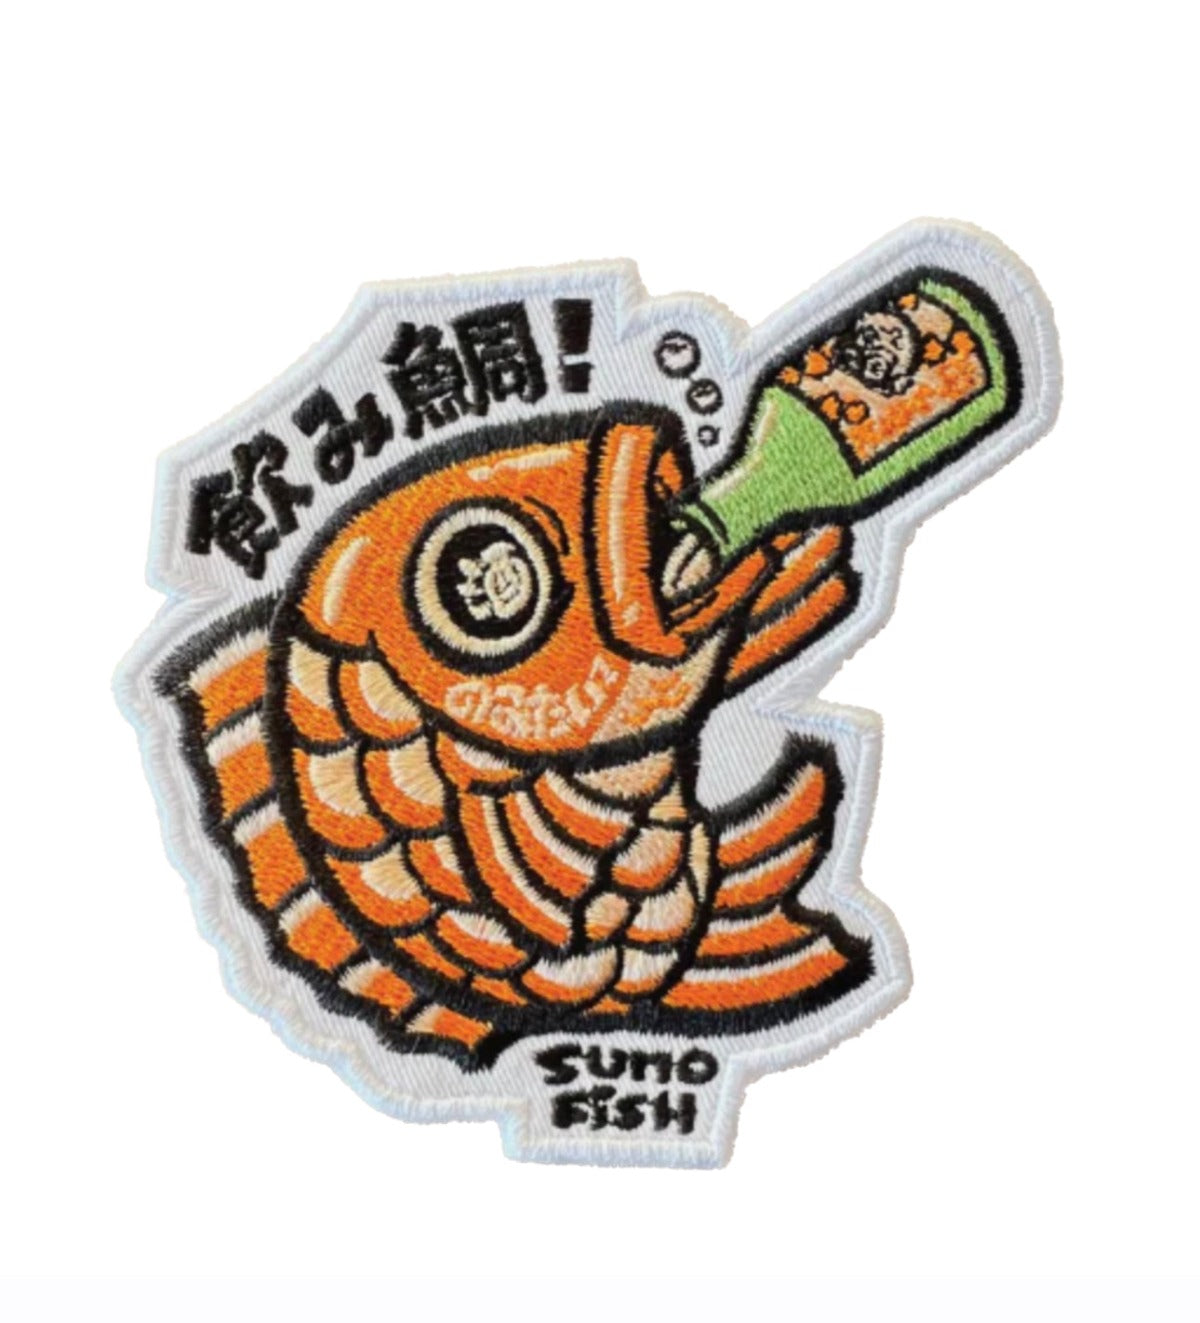 Sumofish Nomitai Drinking Fish 3.5" x 3.75" Patch